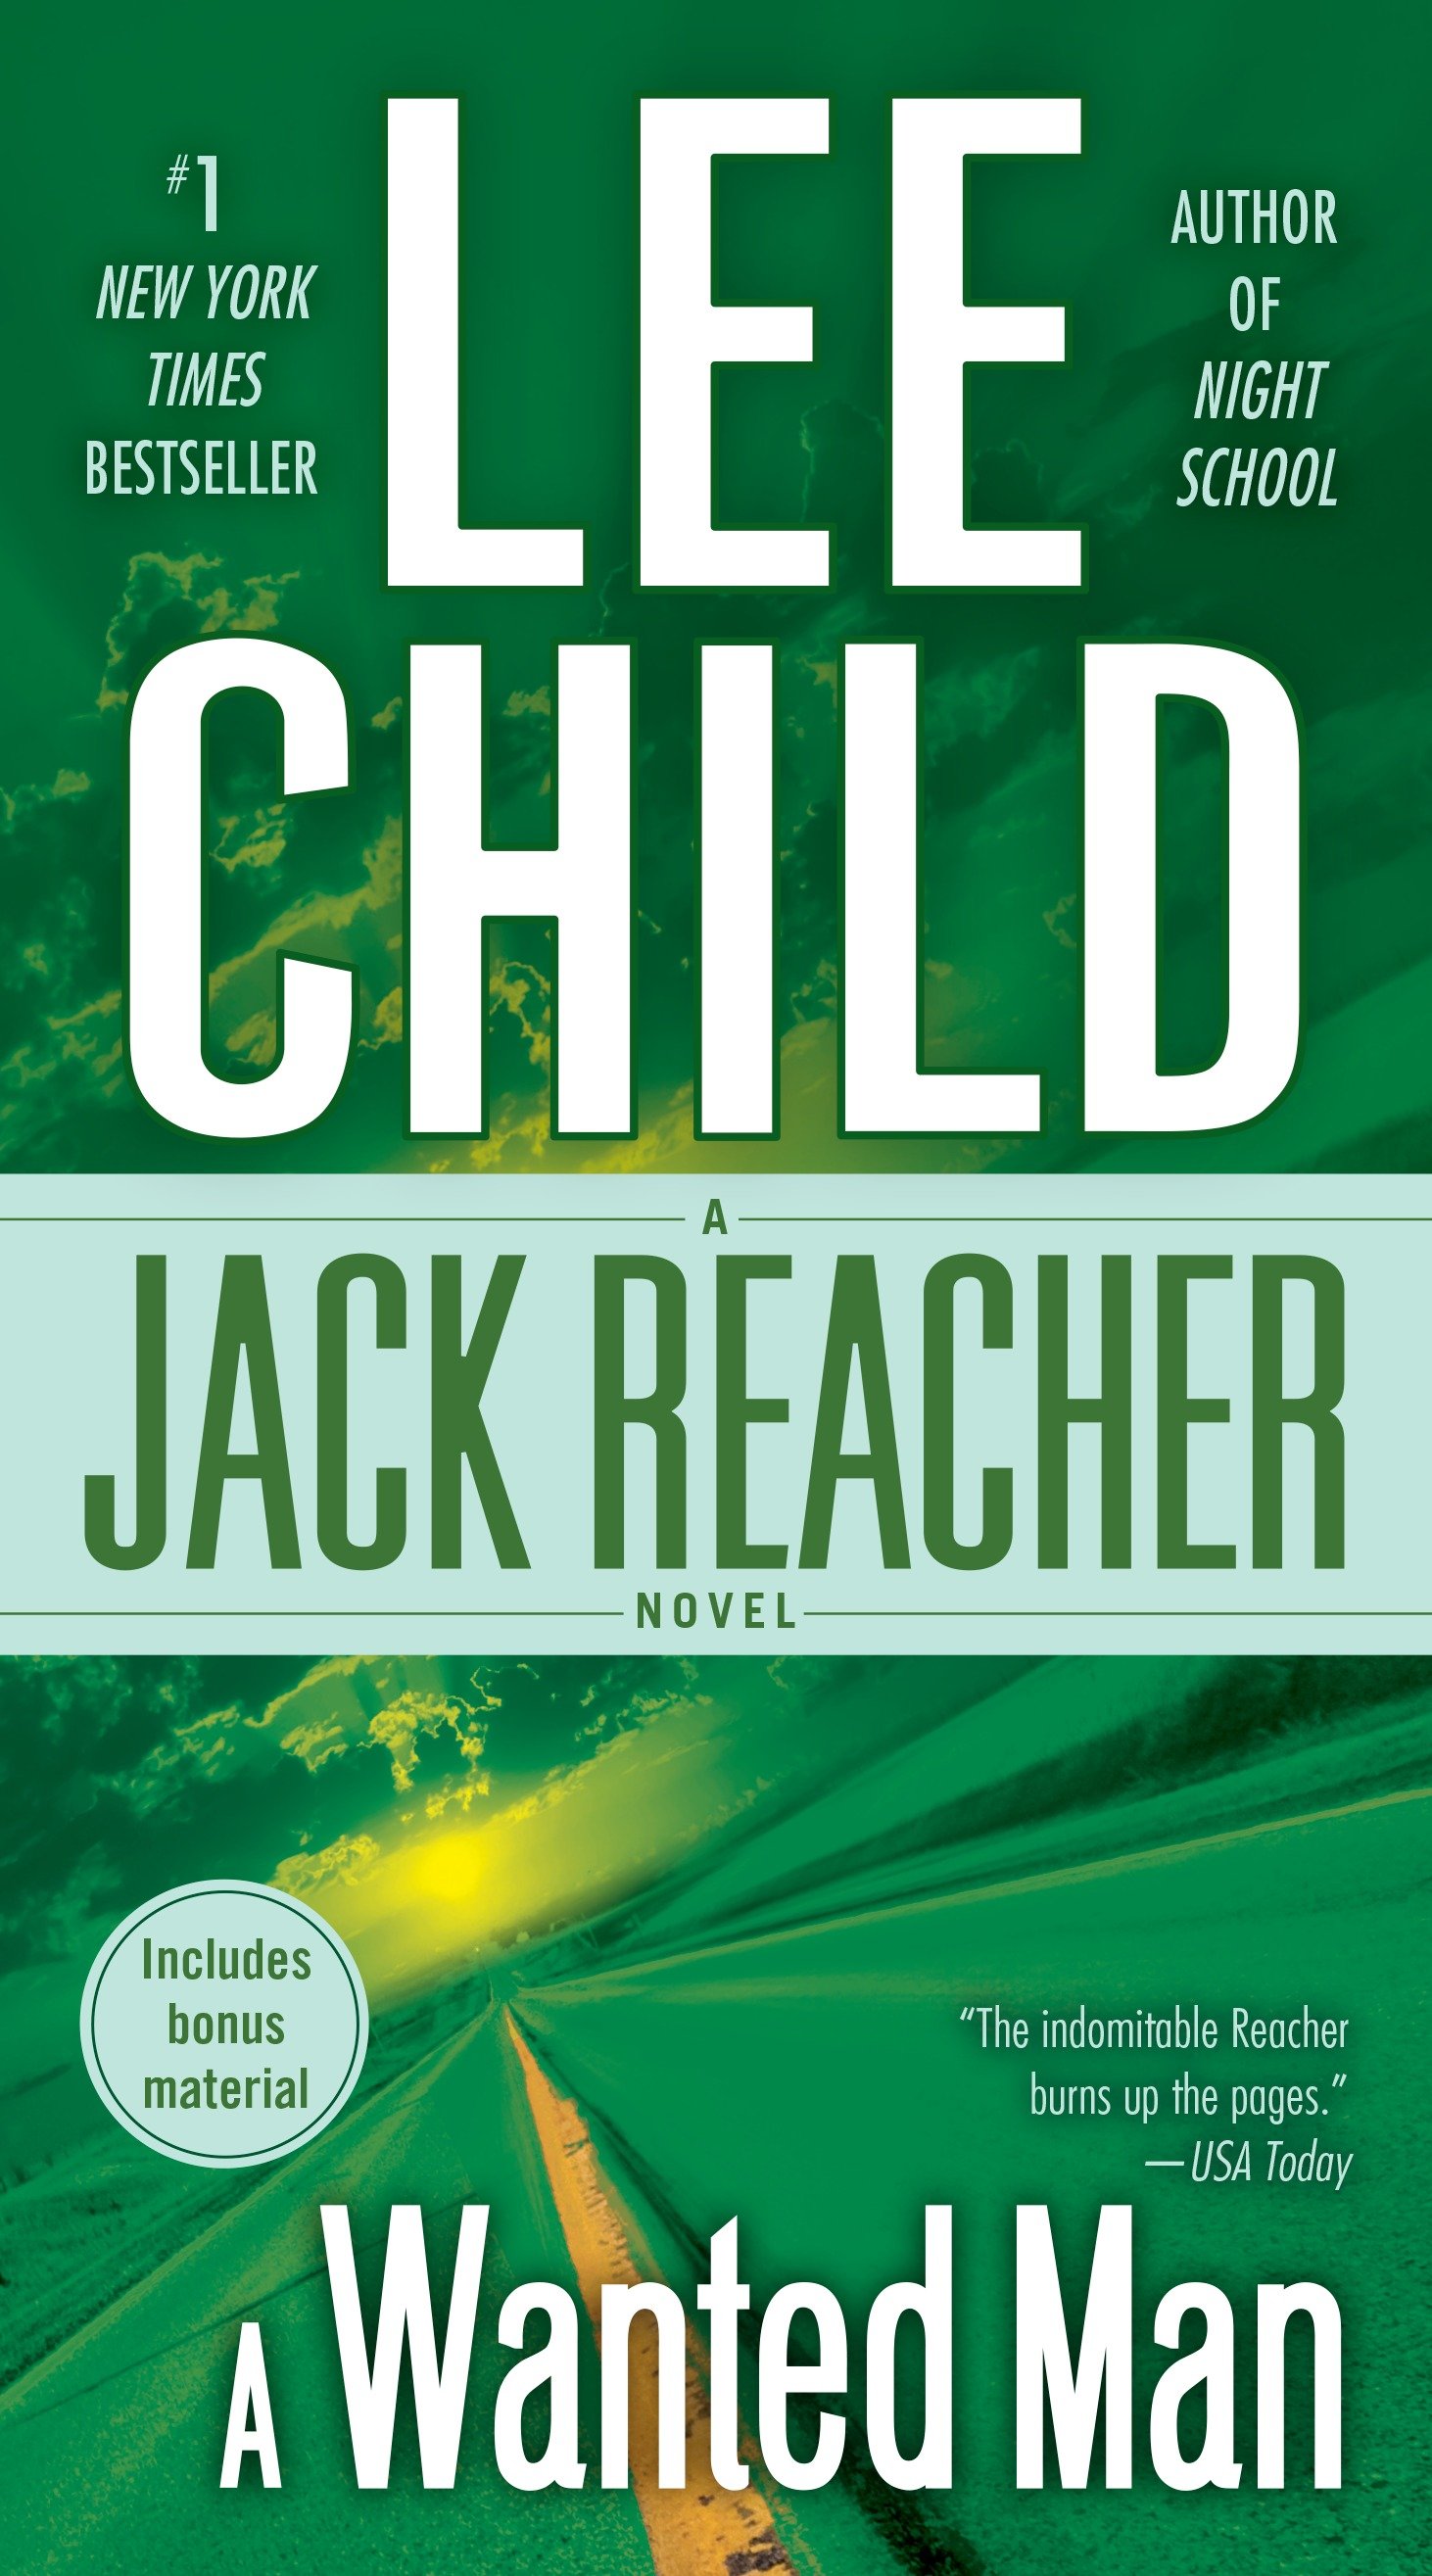 A wanted man a Jack Reacher novel cover image